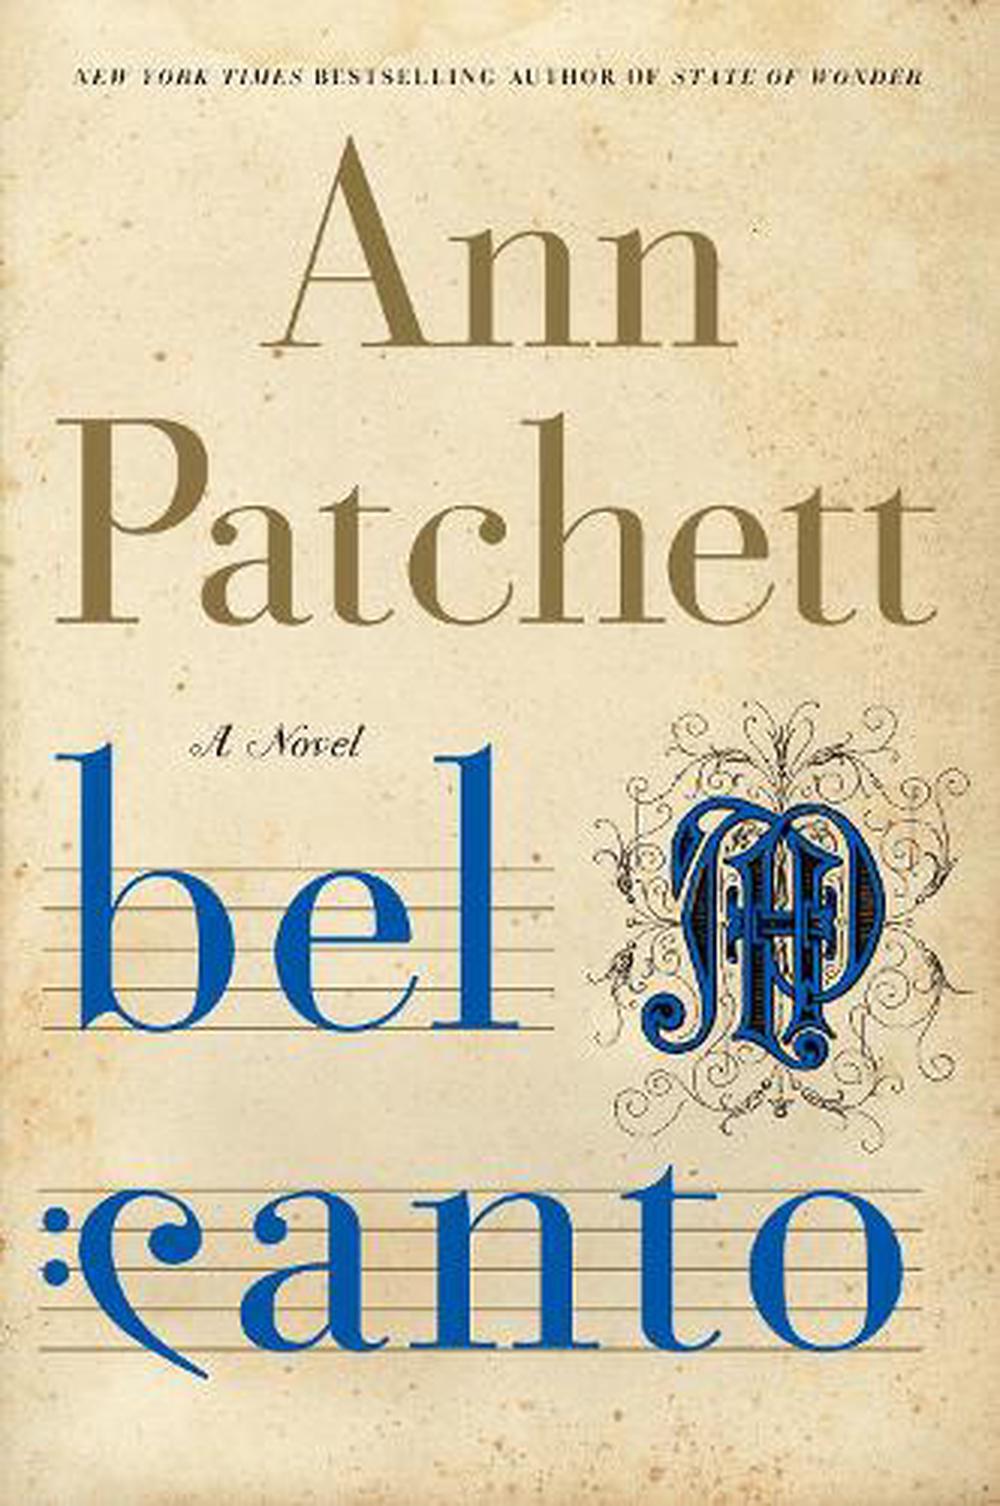 ann patchett 2001 novel